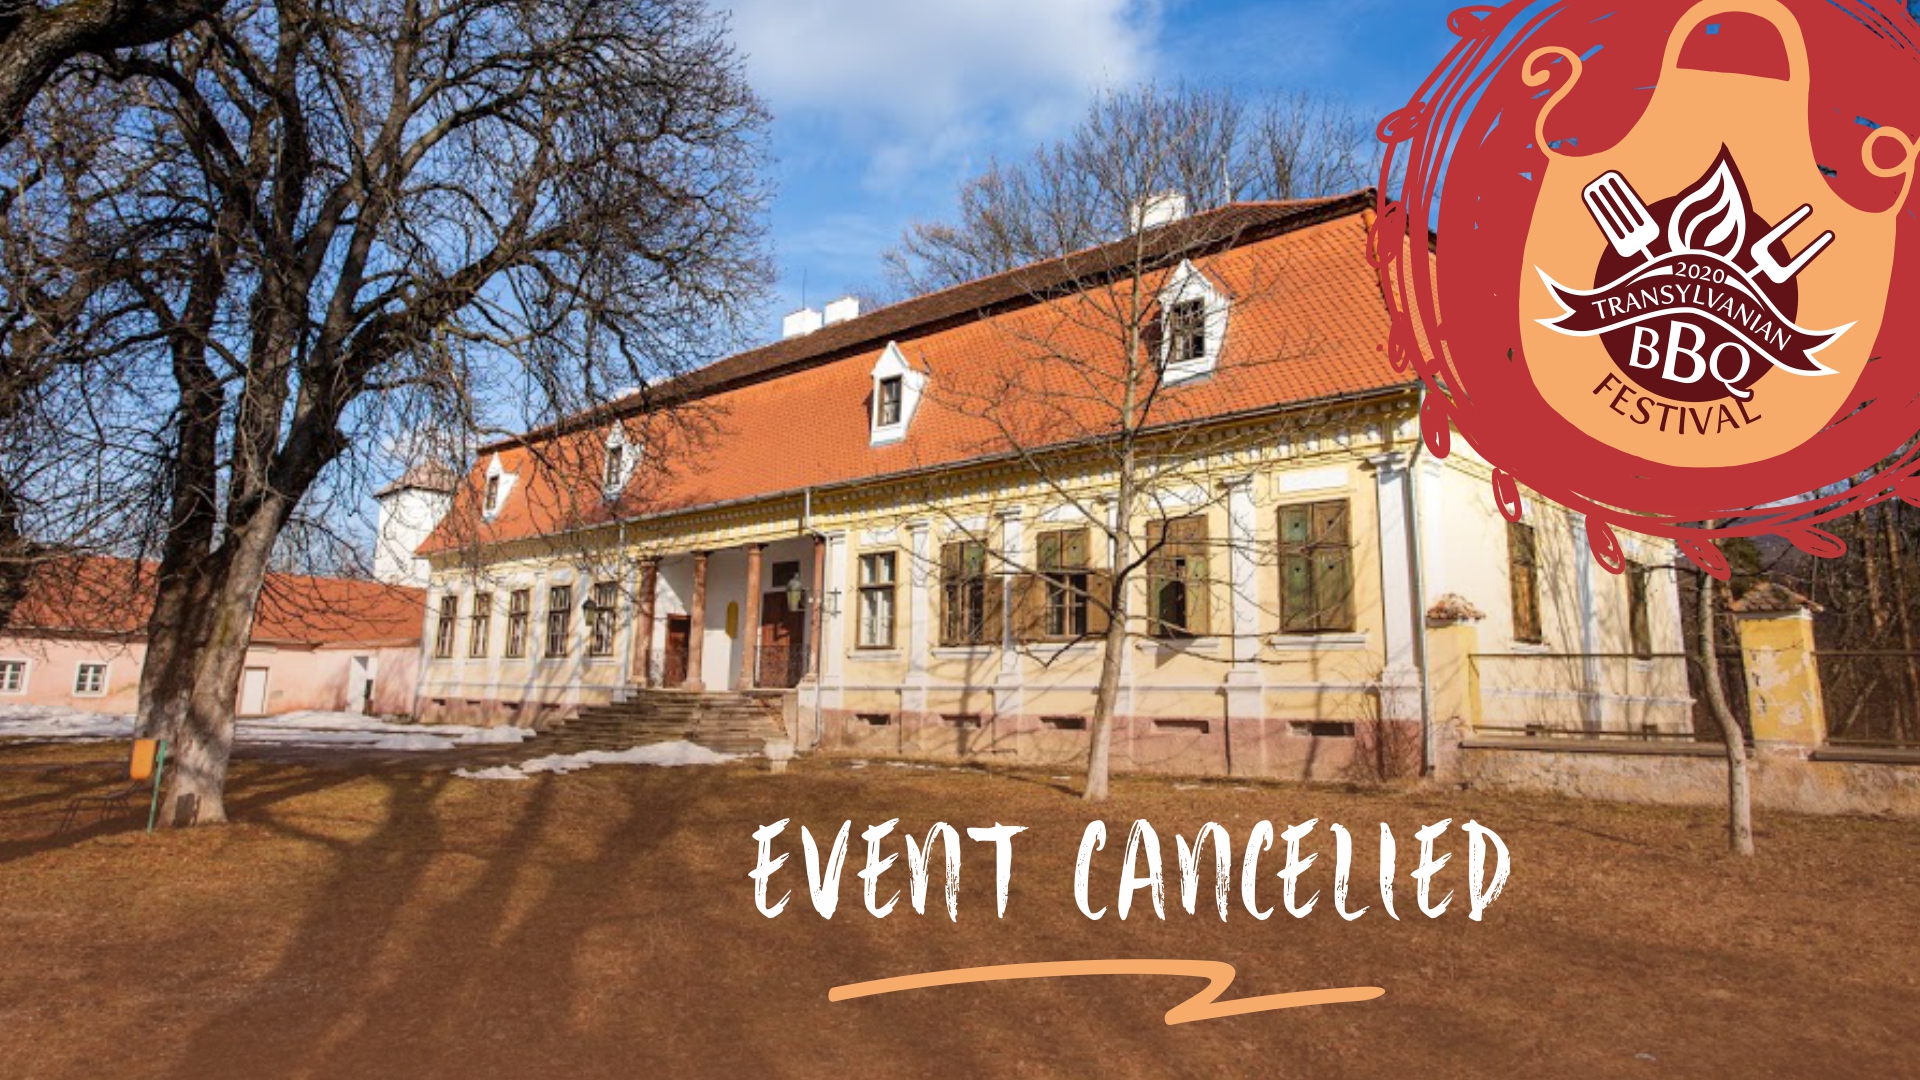 Transylvanian BBQ Festival este anulat